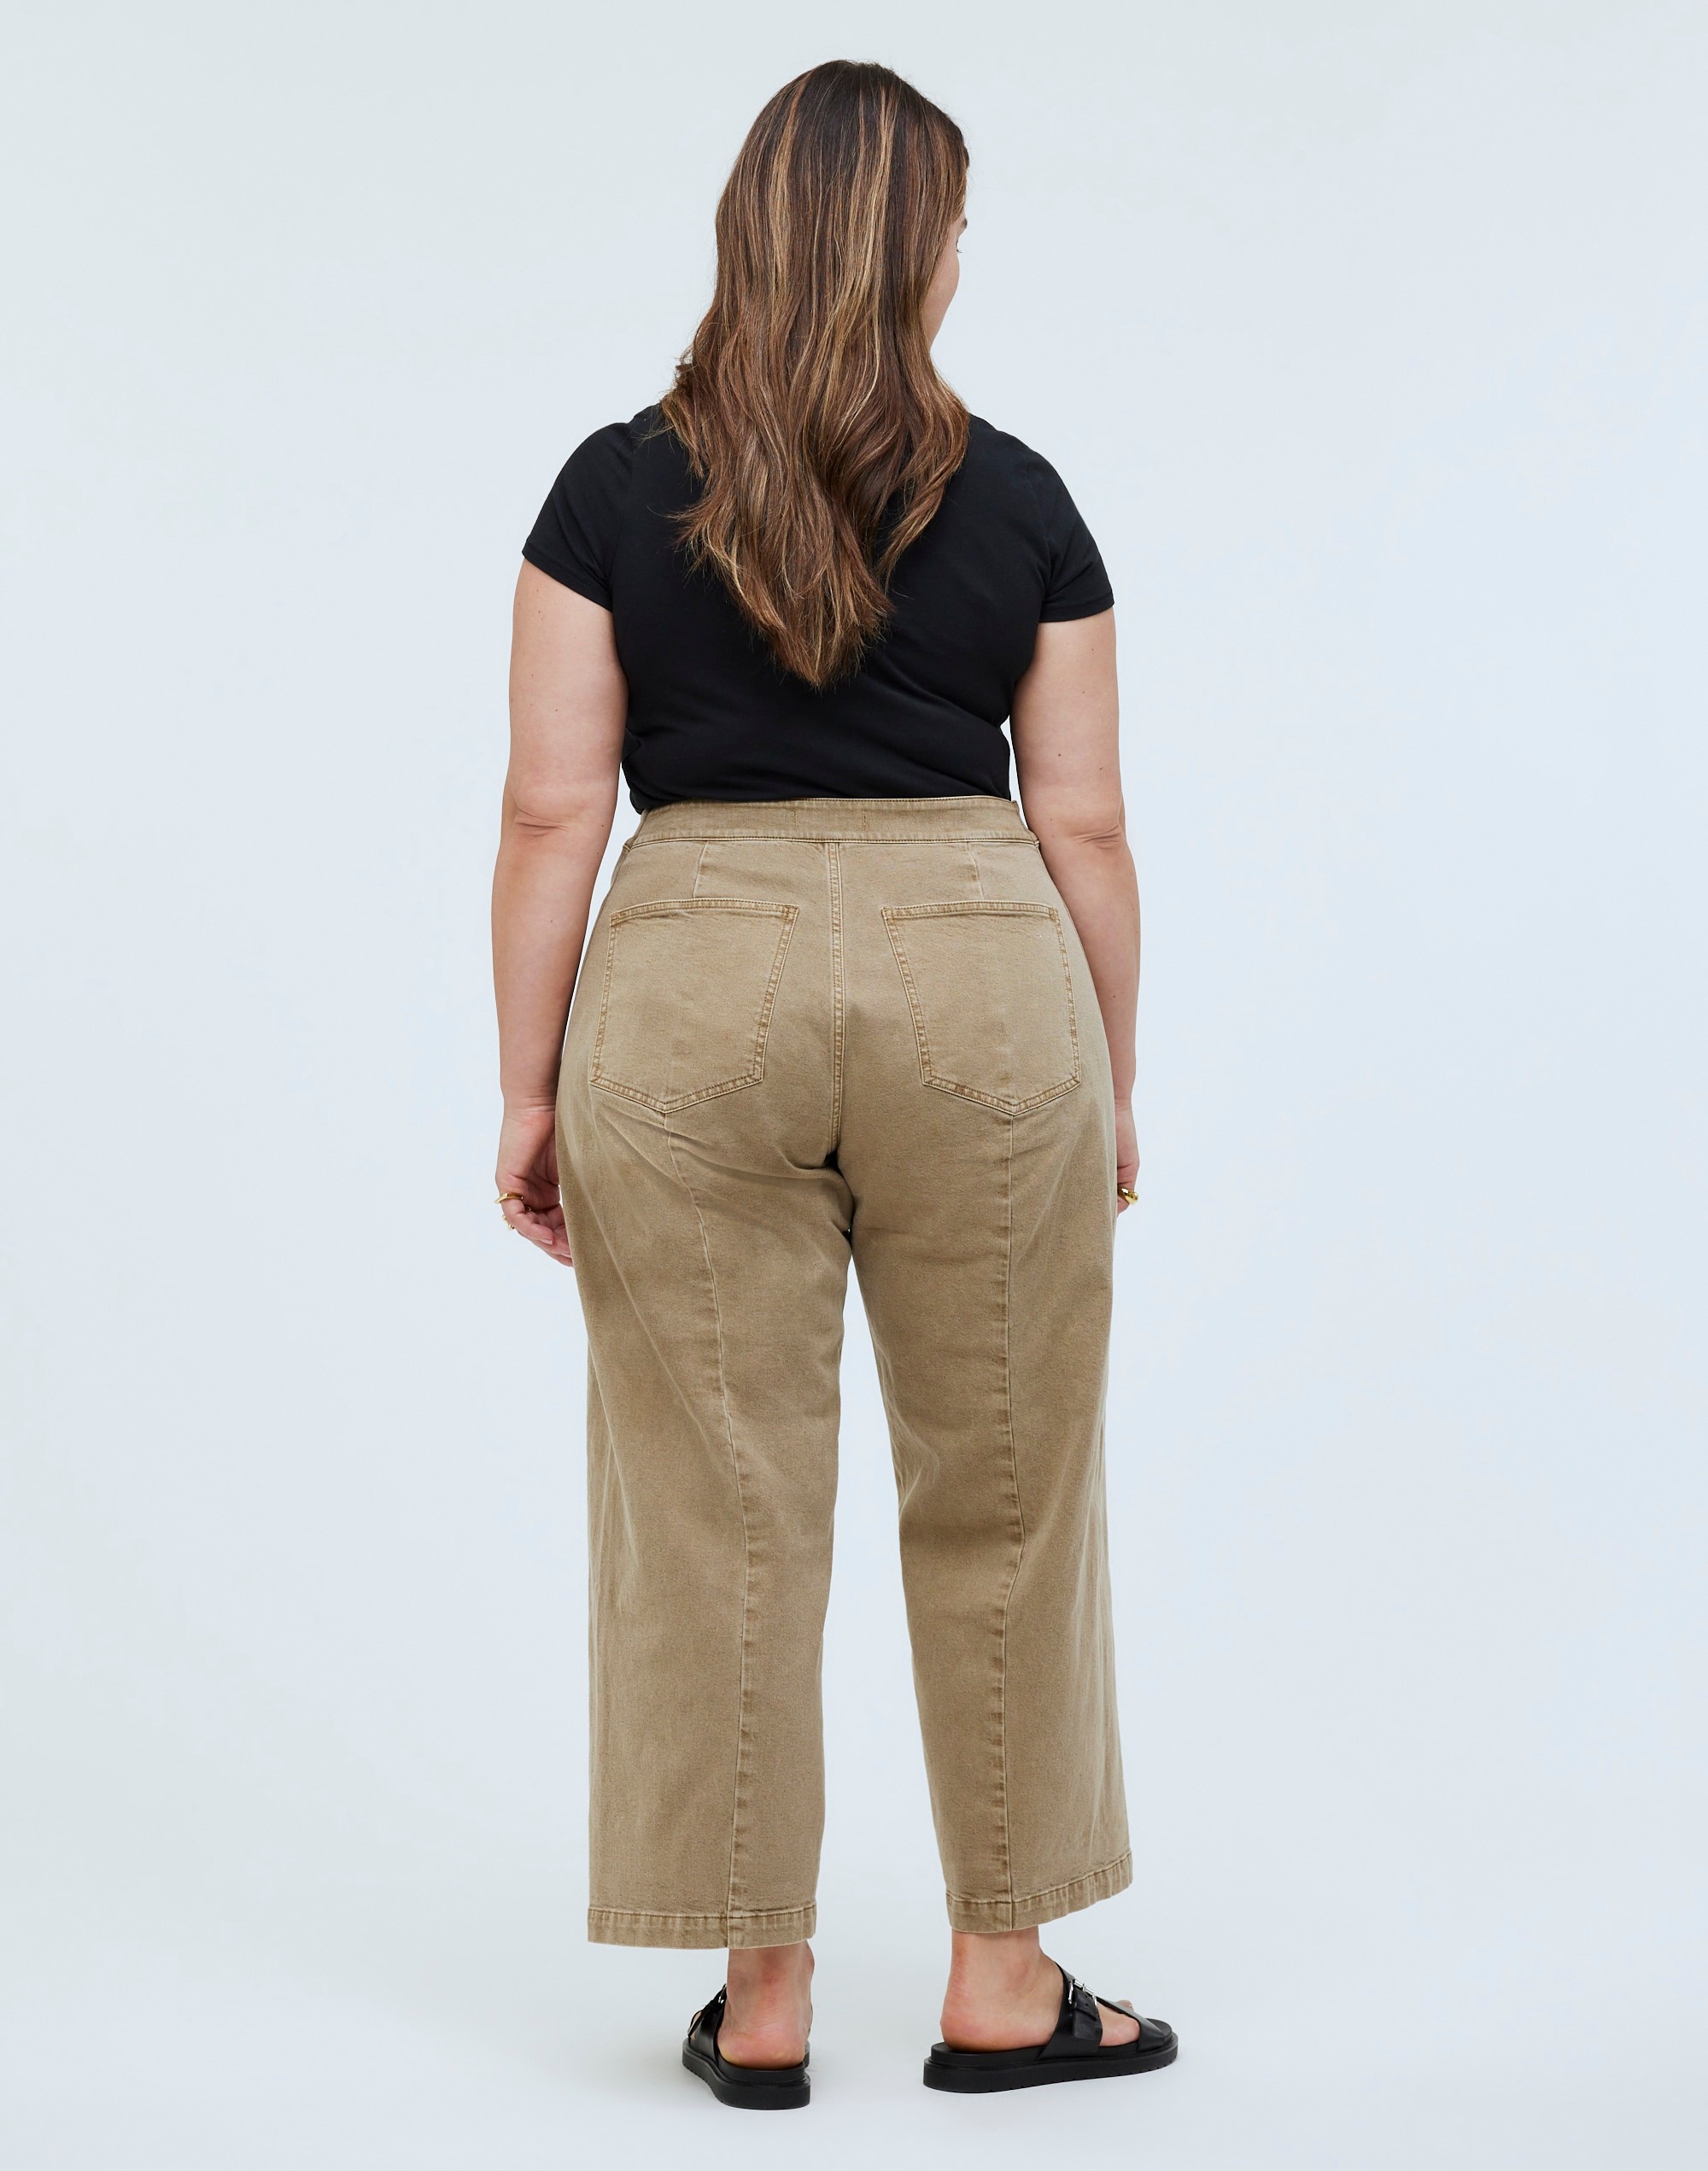 The Plus Curvy Emmett Wide-Leg Crop Pant in Garment Dye: Welt Pocket Edition